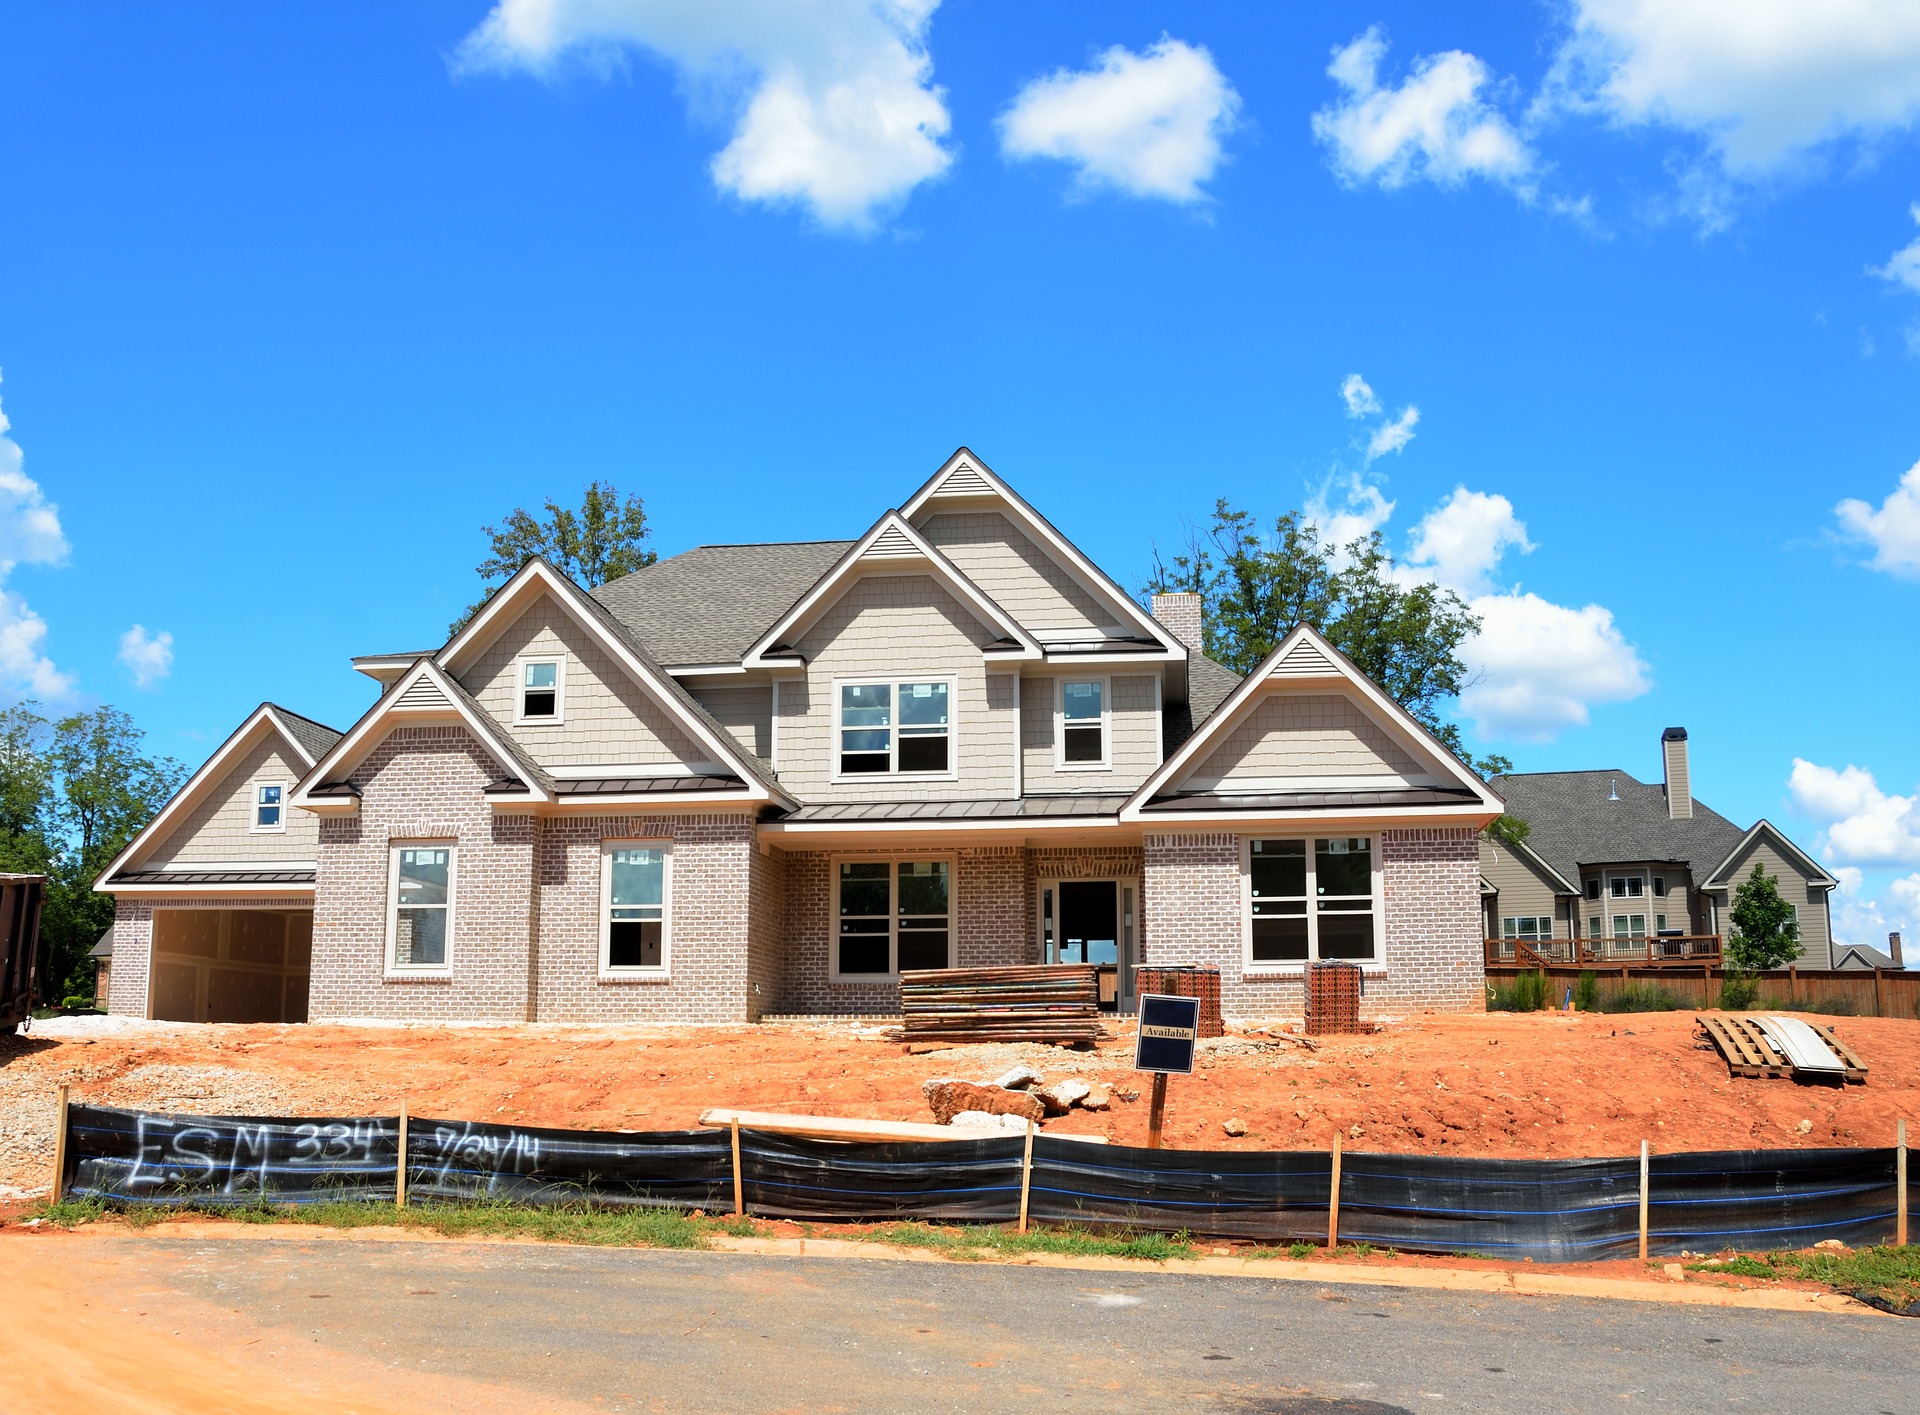 New Construction Homes In Nolensville Tn